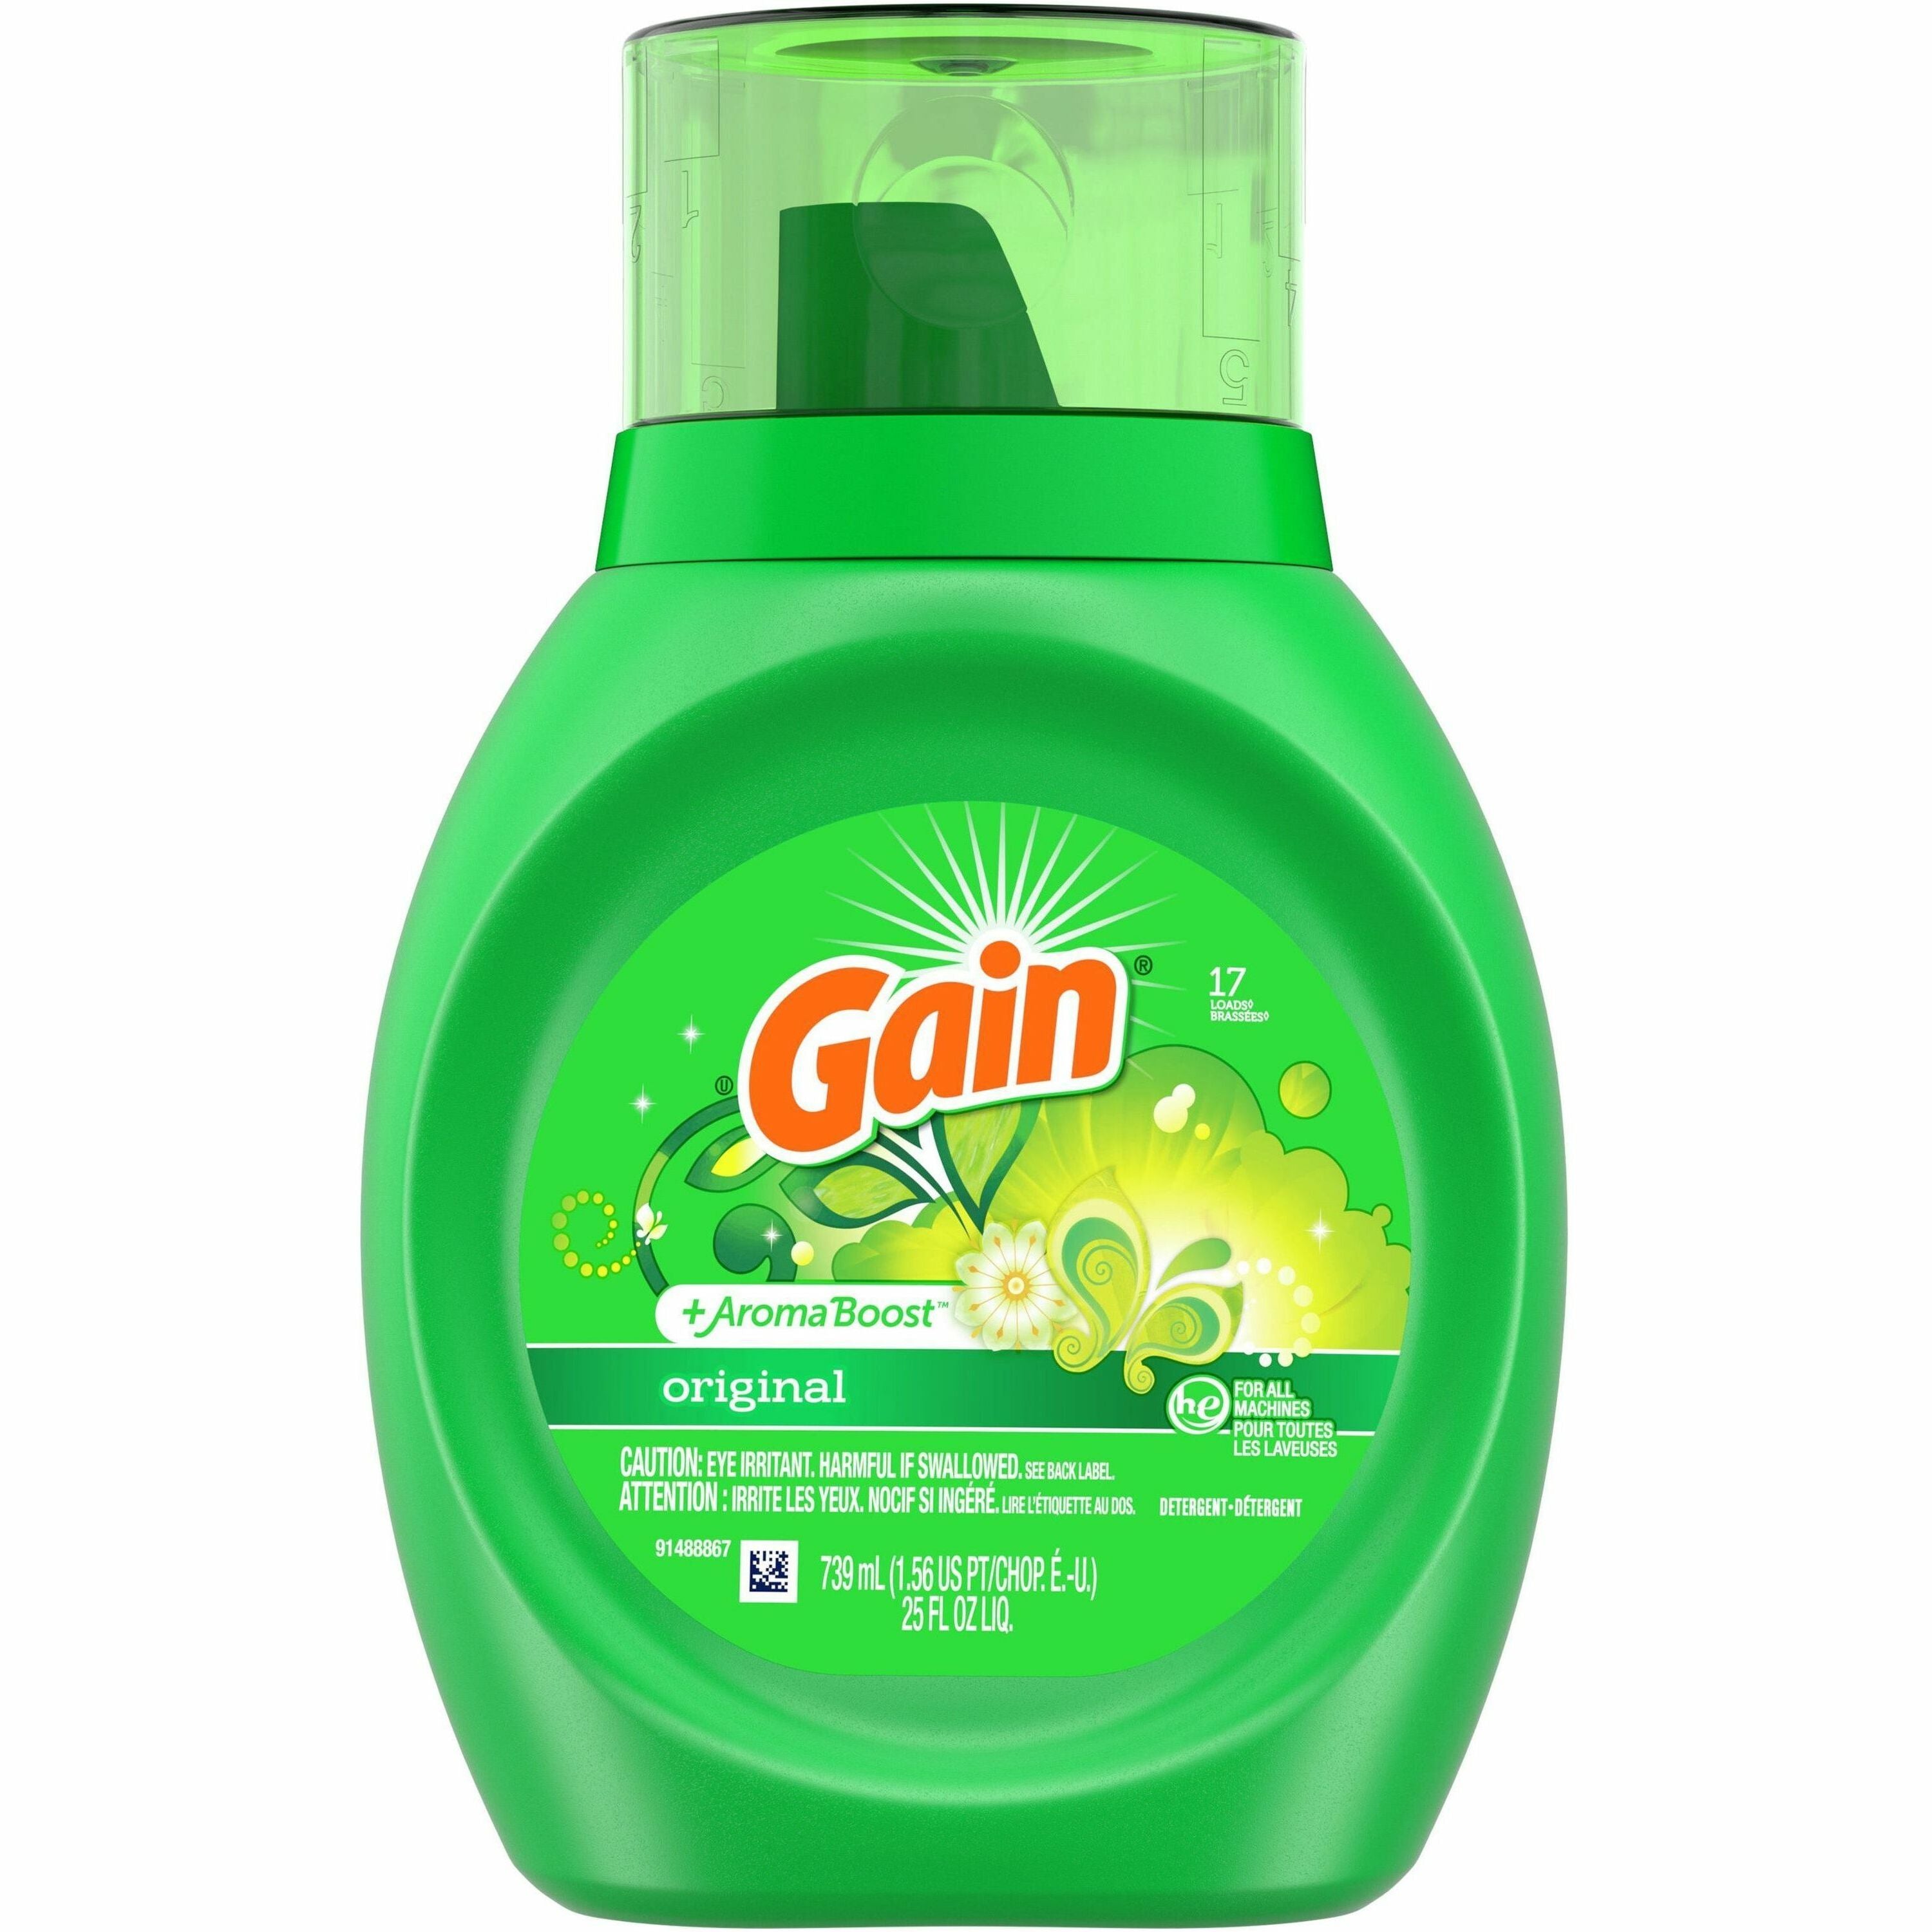 Gain Liquid Laundry Detergent - For Clothing, Laundry - 25 fl oz (0.8 quart) - Original Scent - 6 / Carton - Green - 